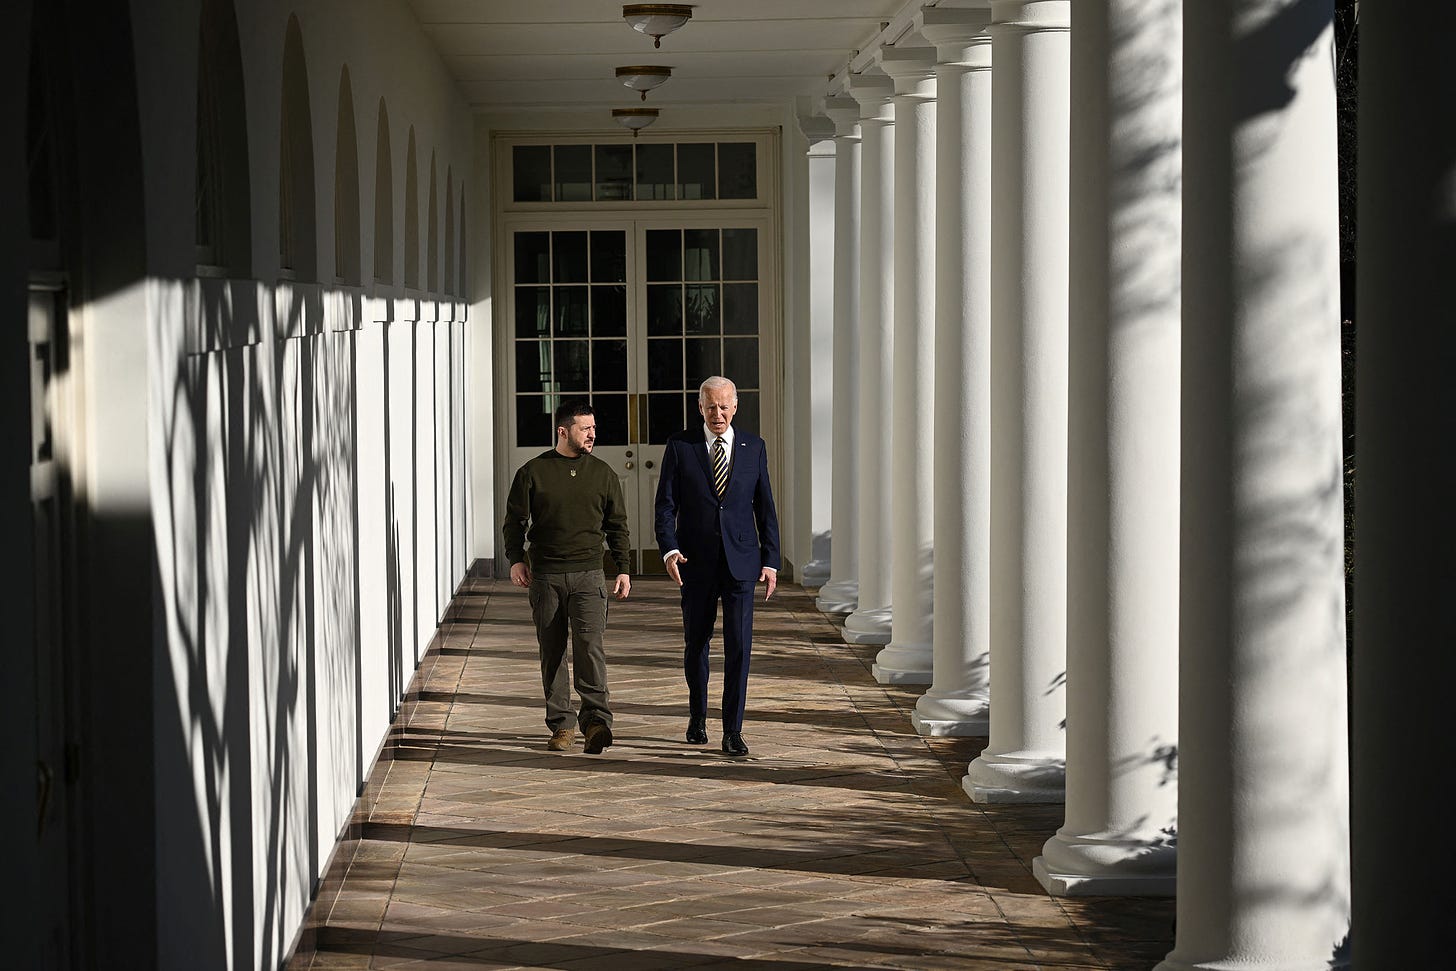 Ukrainian President Volodymyr Zelensky and US President Joe Biden walk through the White House colonnade on Wednesday.